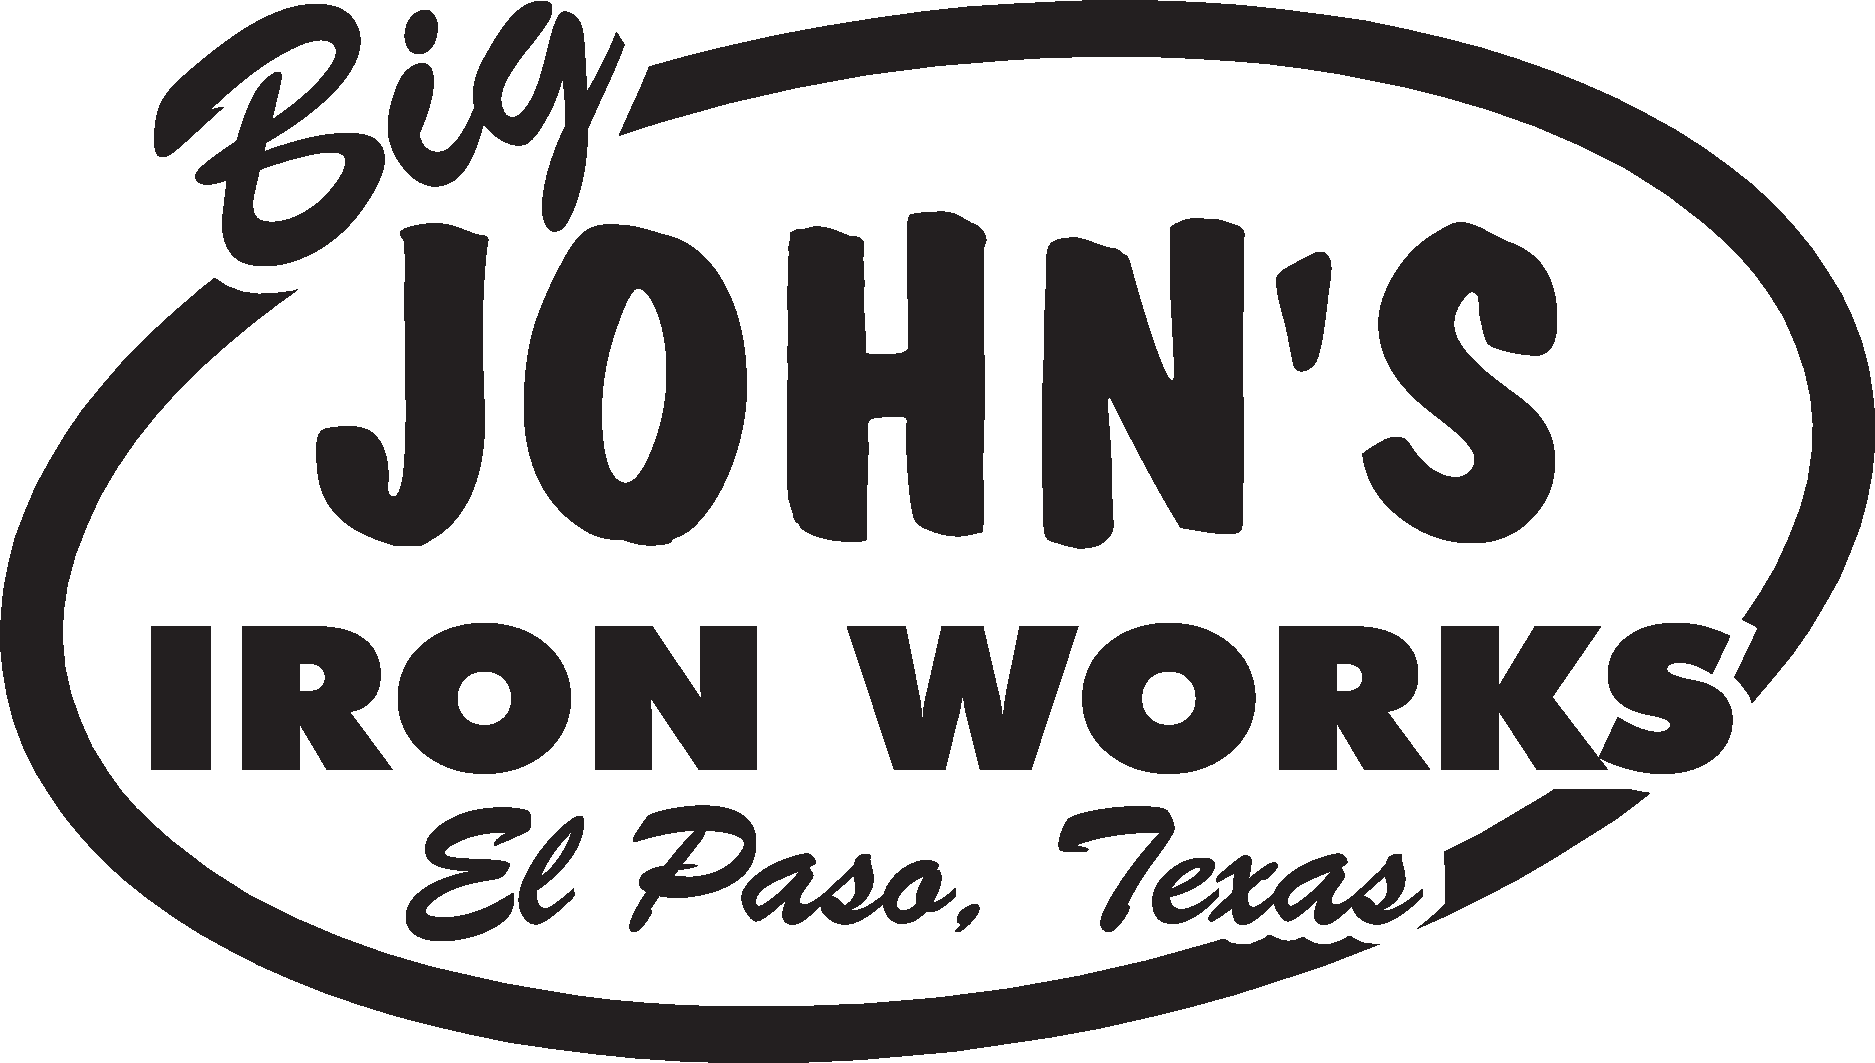 Big John’s Iron Works Logo Vector